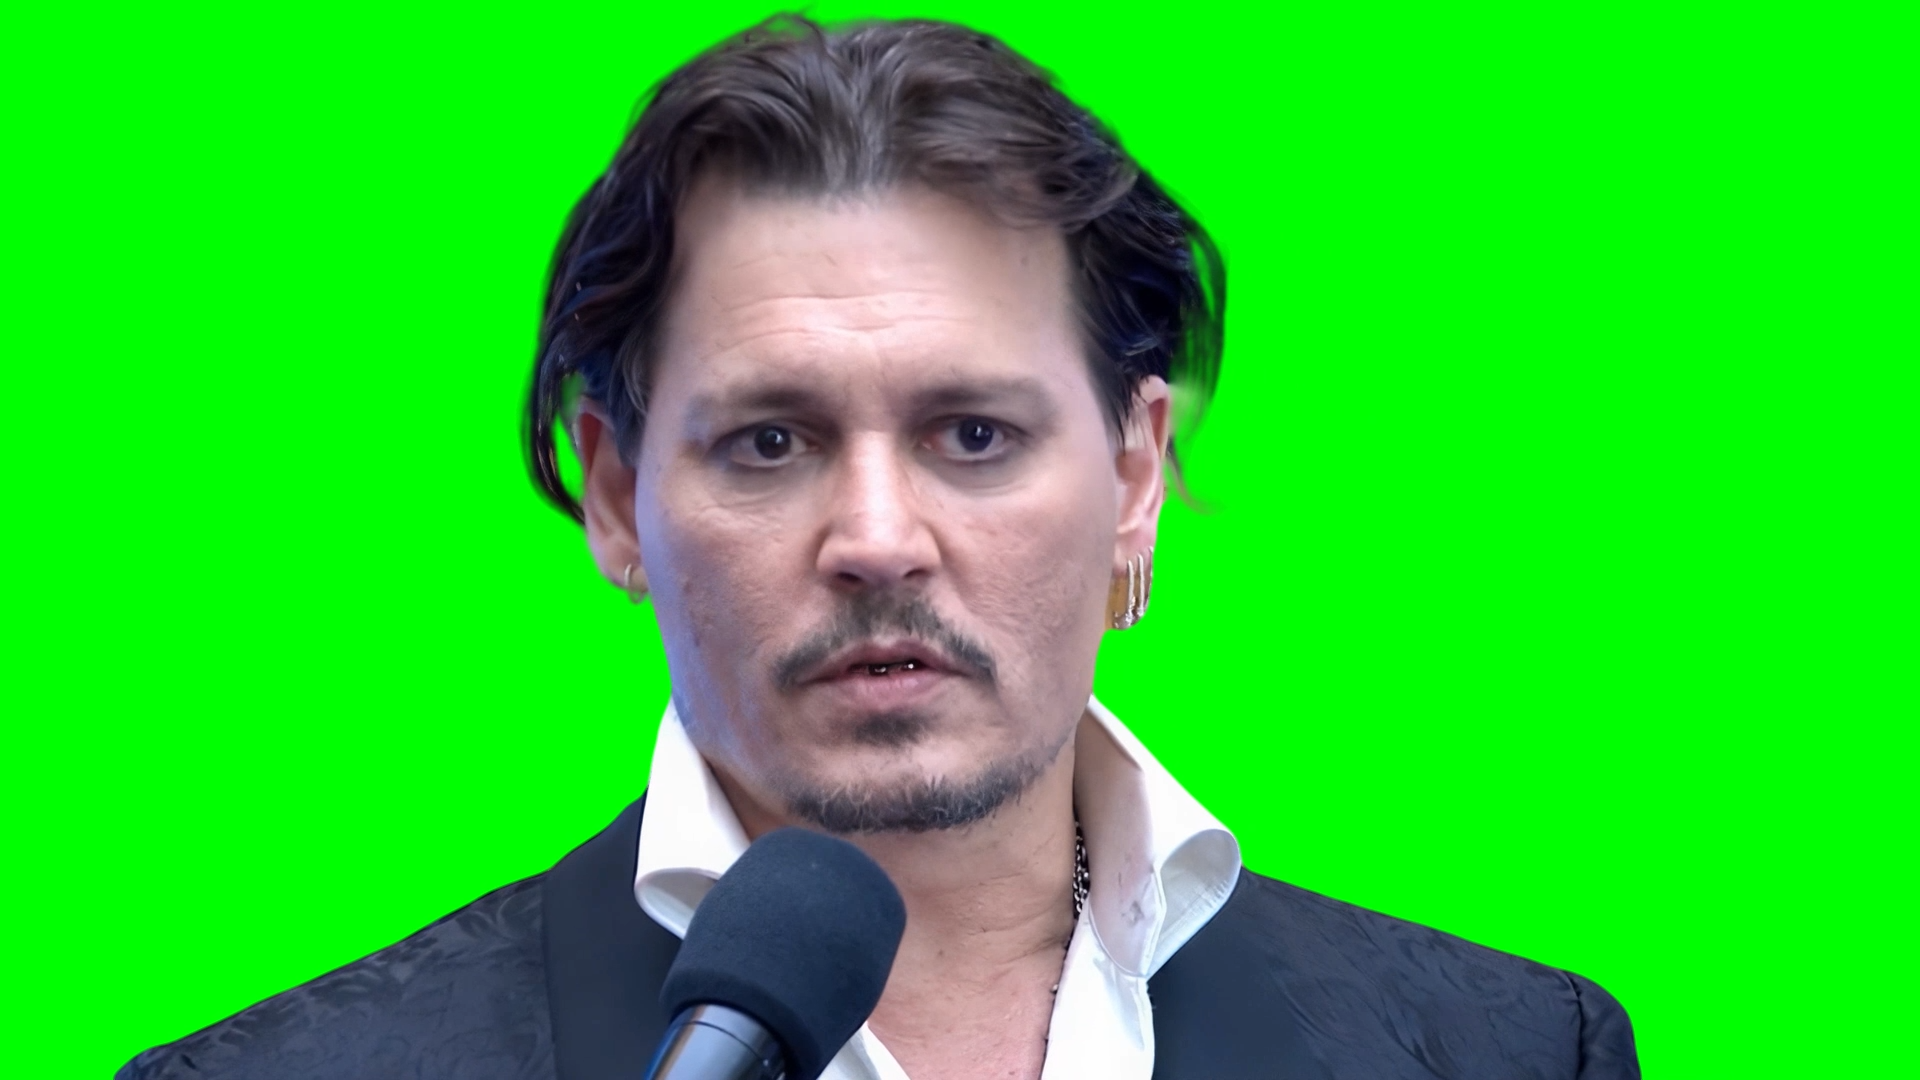 Johnny Depp saying 